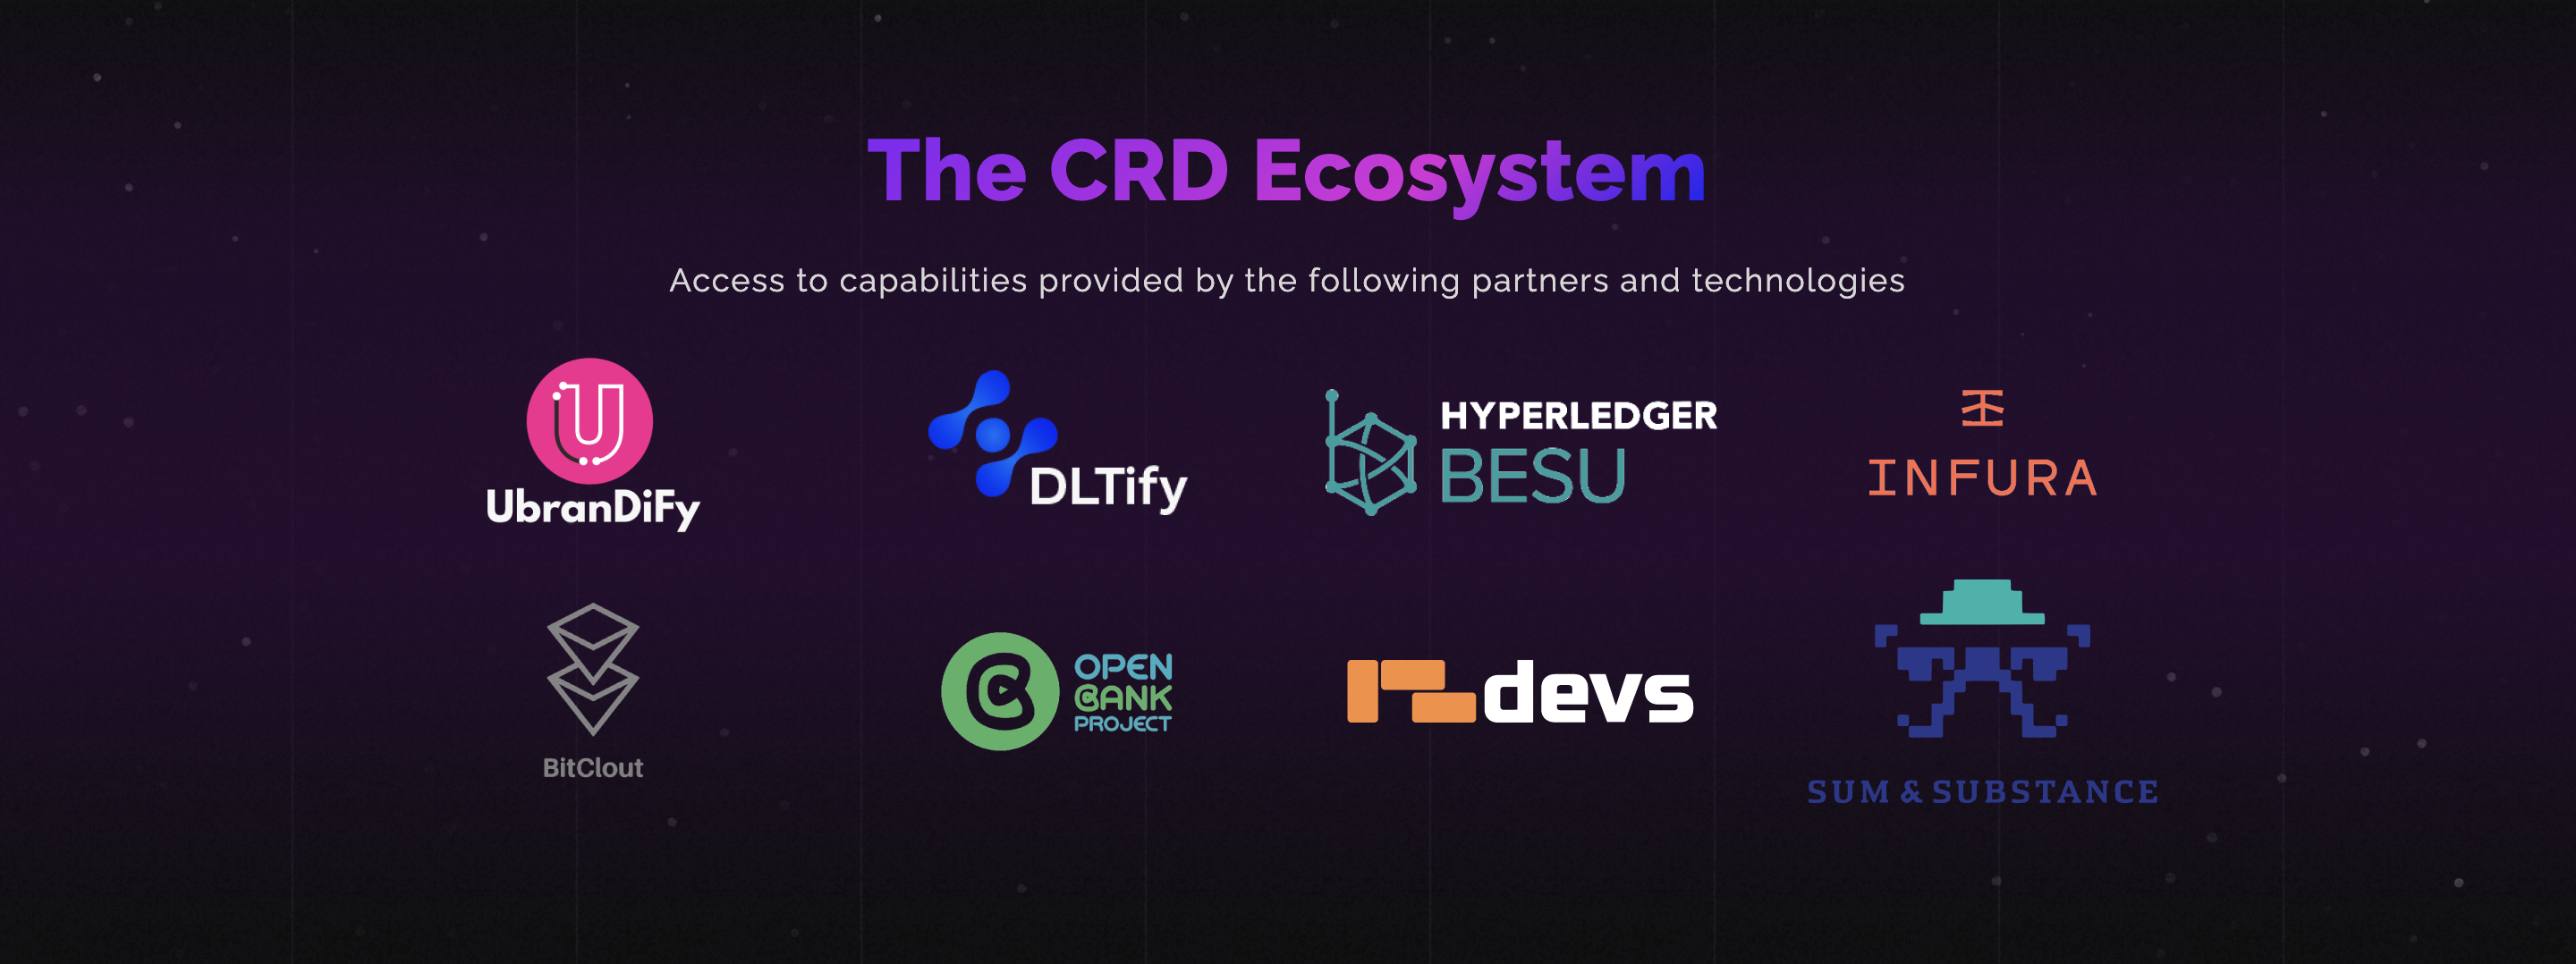 CRD Network Ecosystem